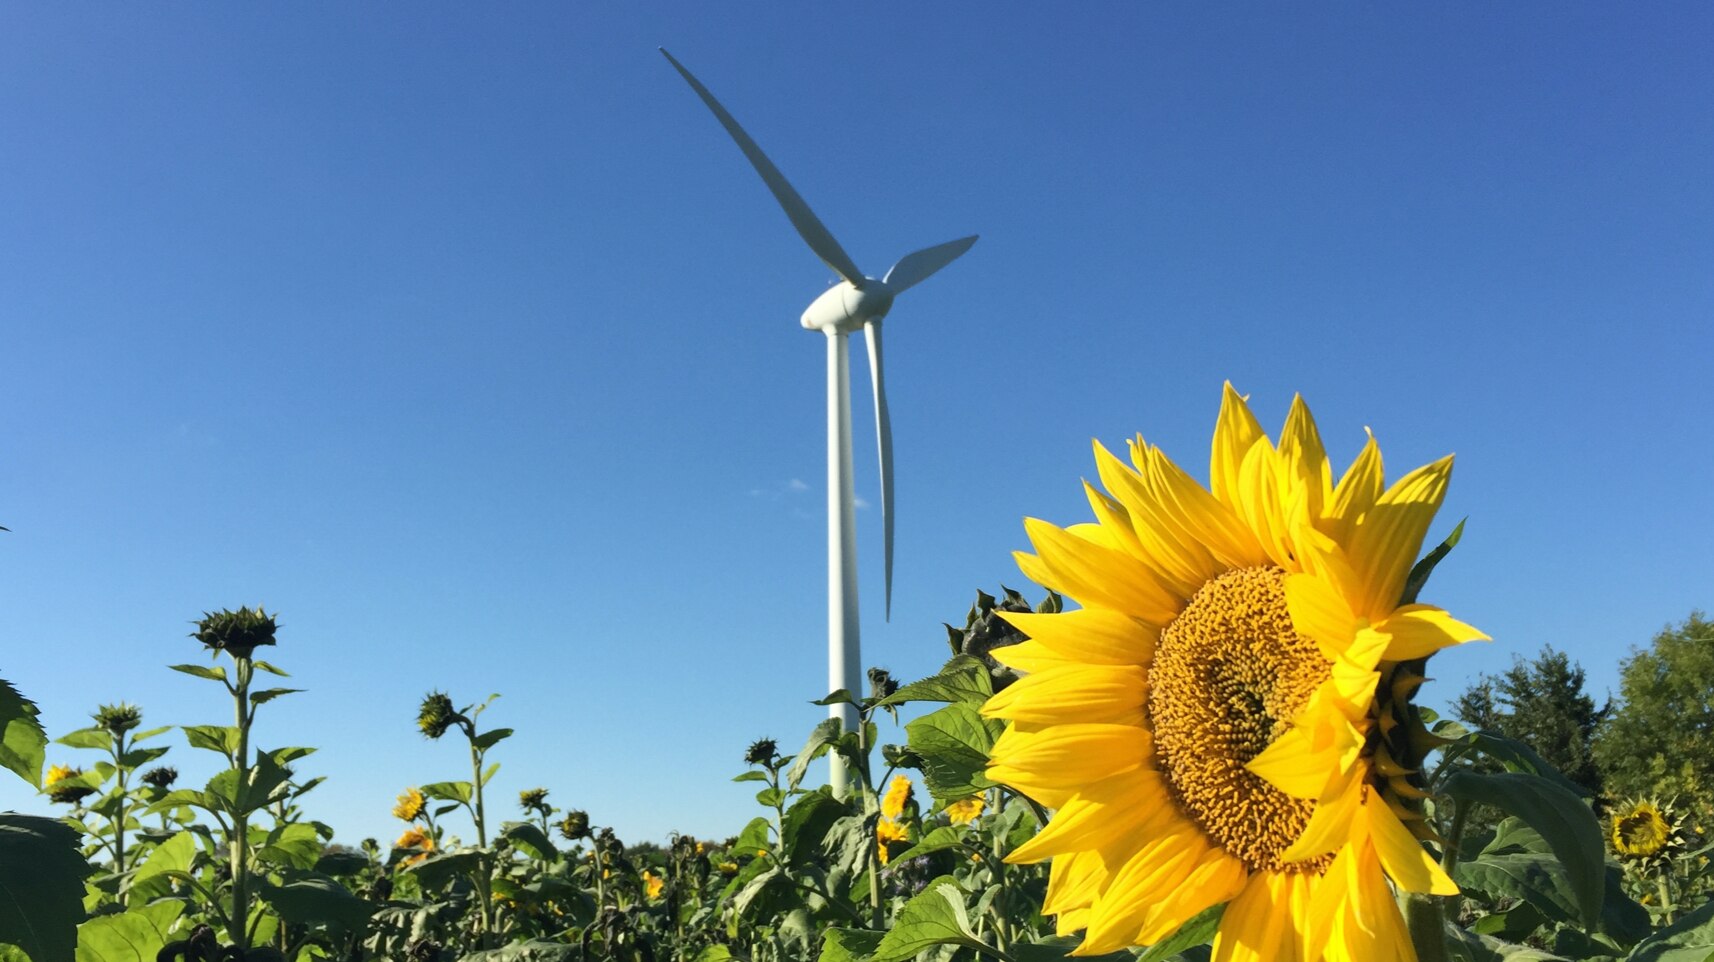 Wind turbine standing in a field of sunflowers under a clear blue sky